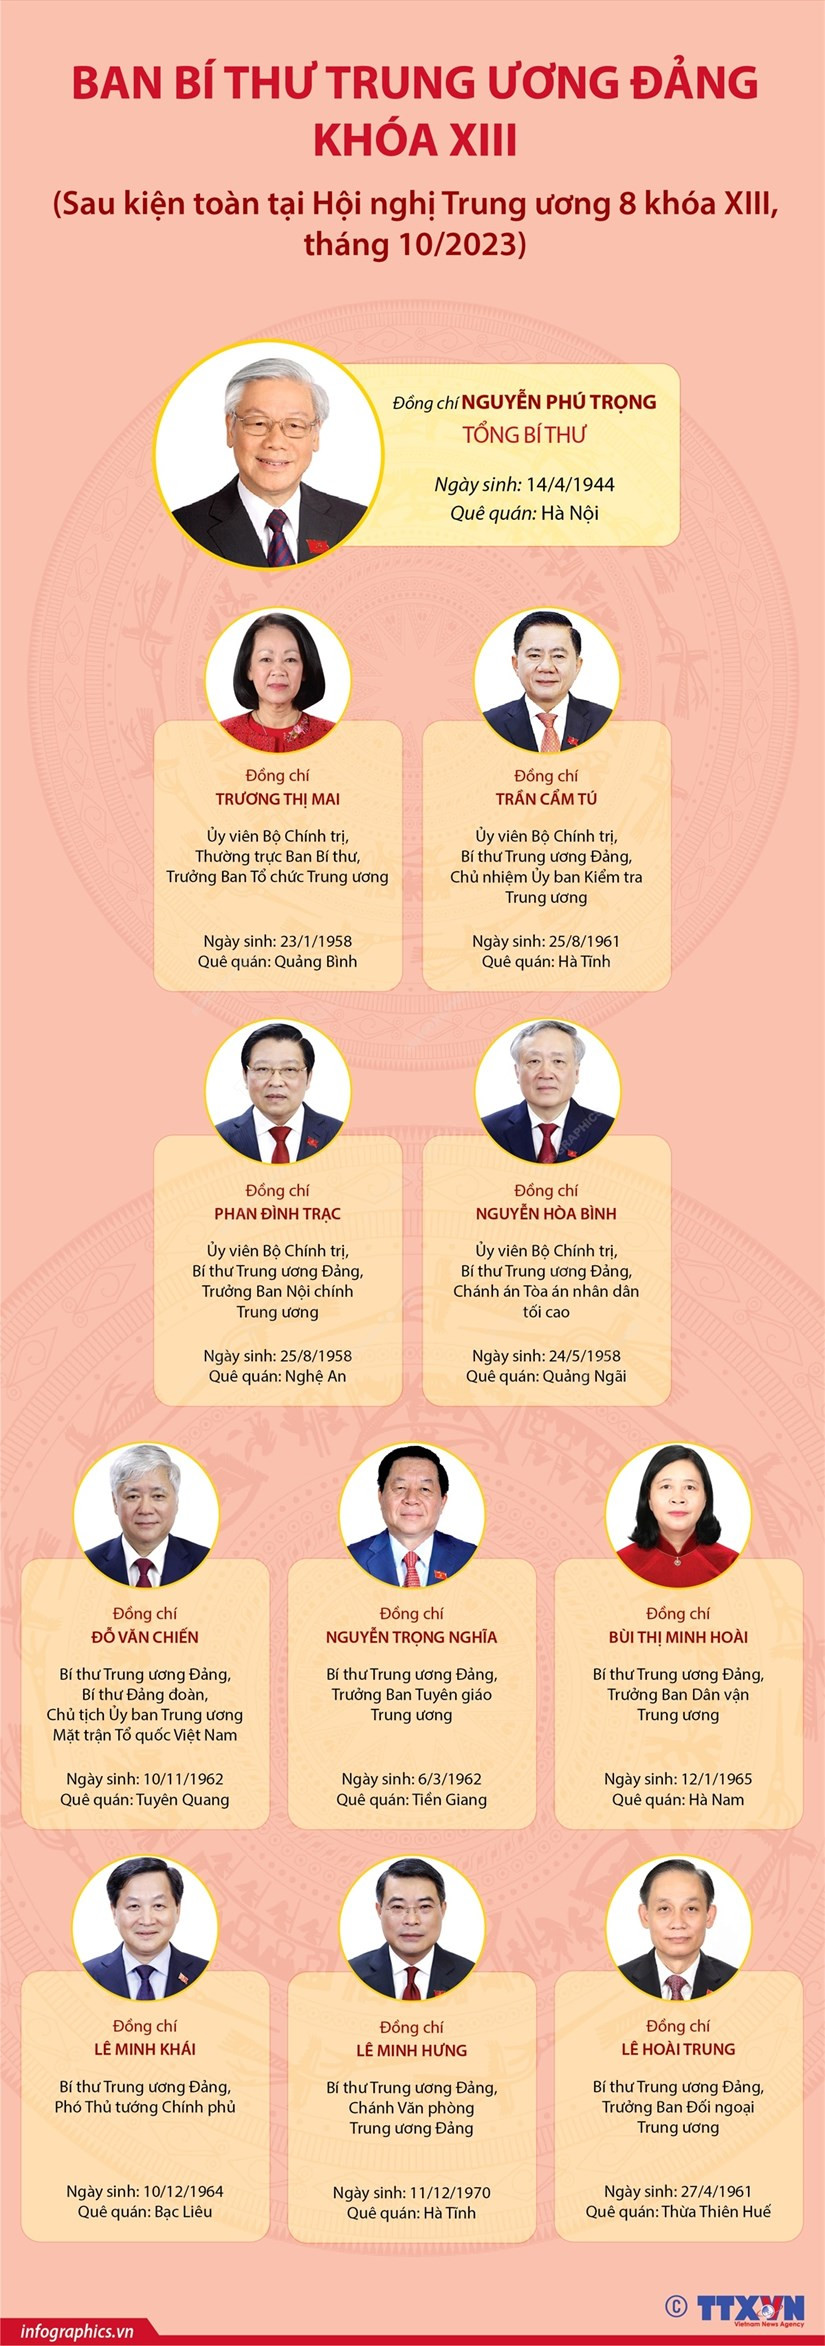 [Infographics] Danh sach Ban Bi thu Trung uong Dang khoa XIII hinh anh 1